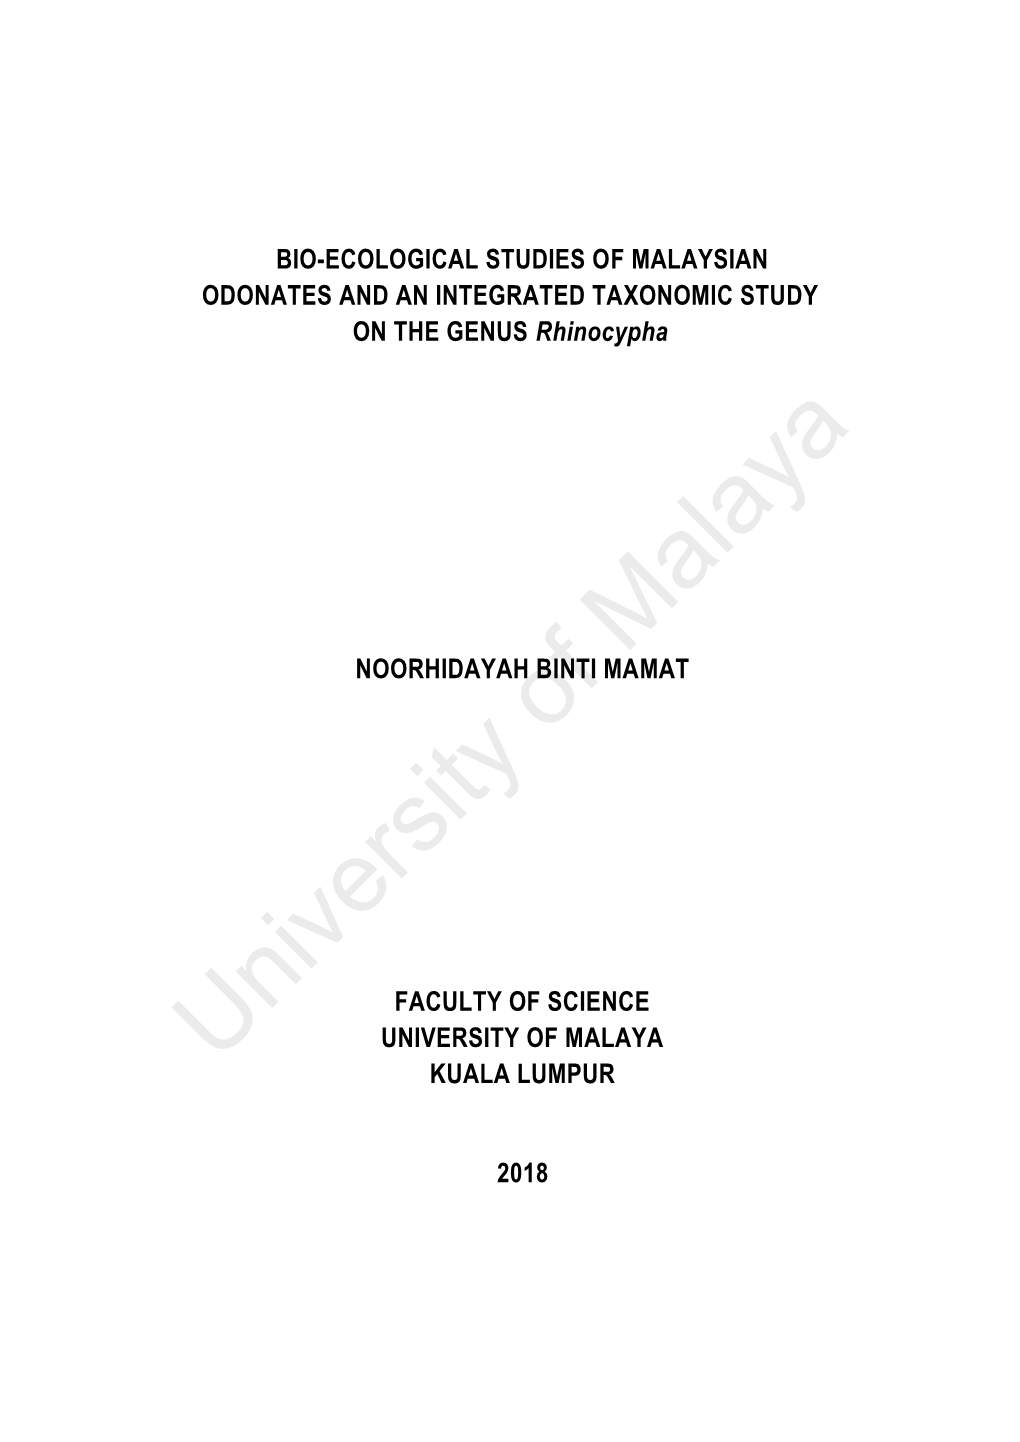 BIO-ECOLOGICAL STUDIES of MALAYSIAN ODONATES and an INTEGRATED TAXONOMIC STUDY on the GENUS Rhinocypha